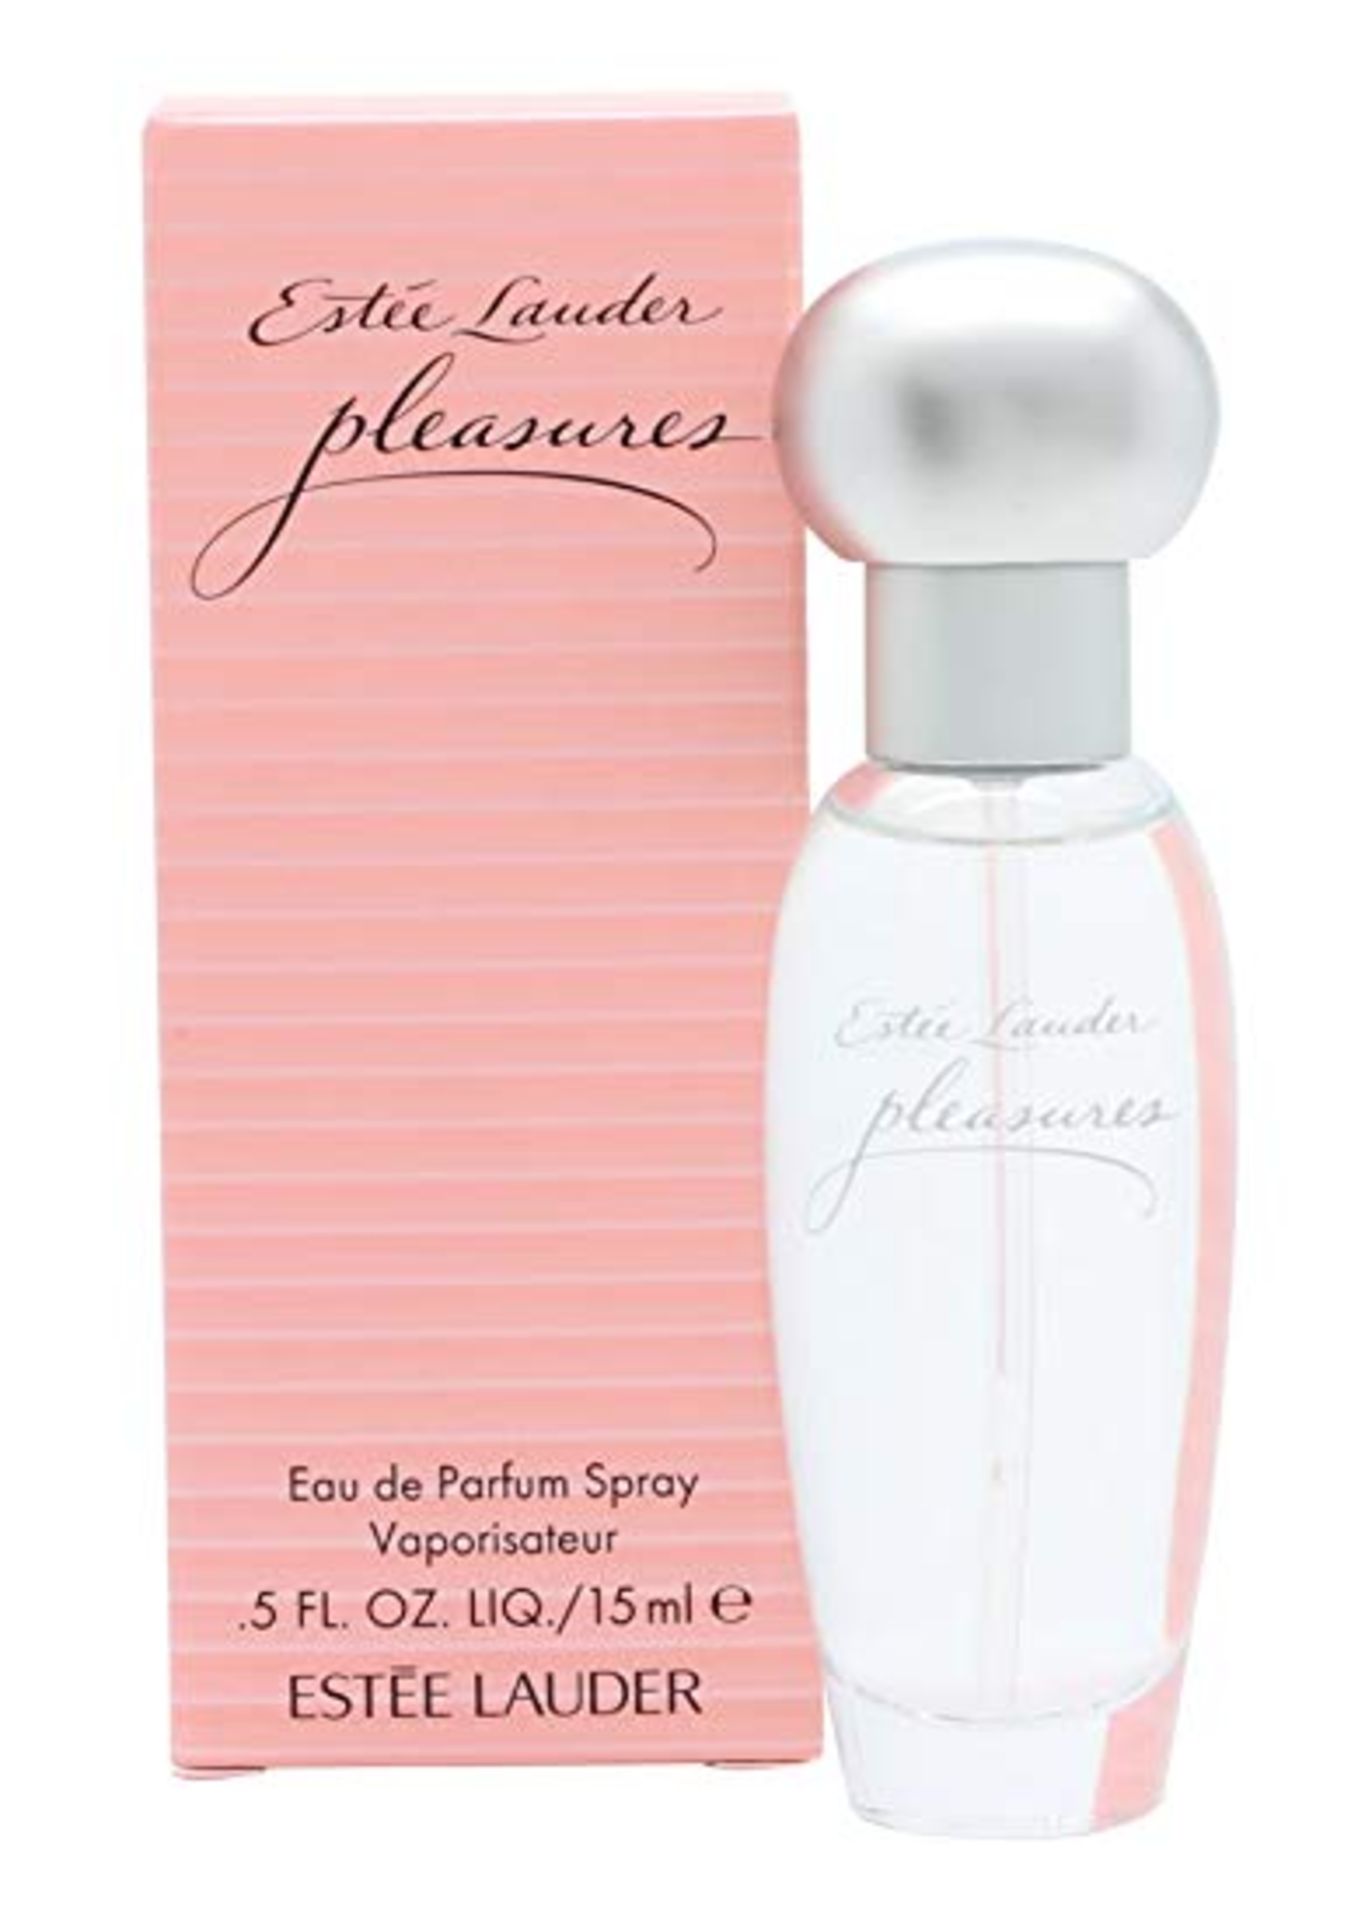 V Brand New Estee Lauder Pleasures 15ml Eau De Parfum Spray ISP £27 (Boots)